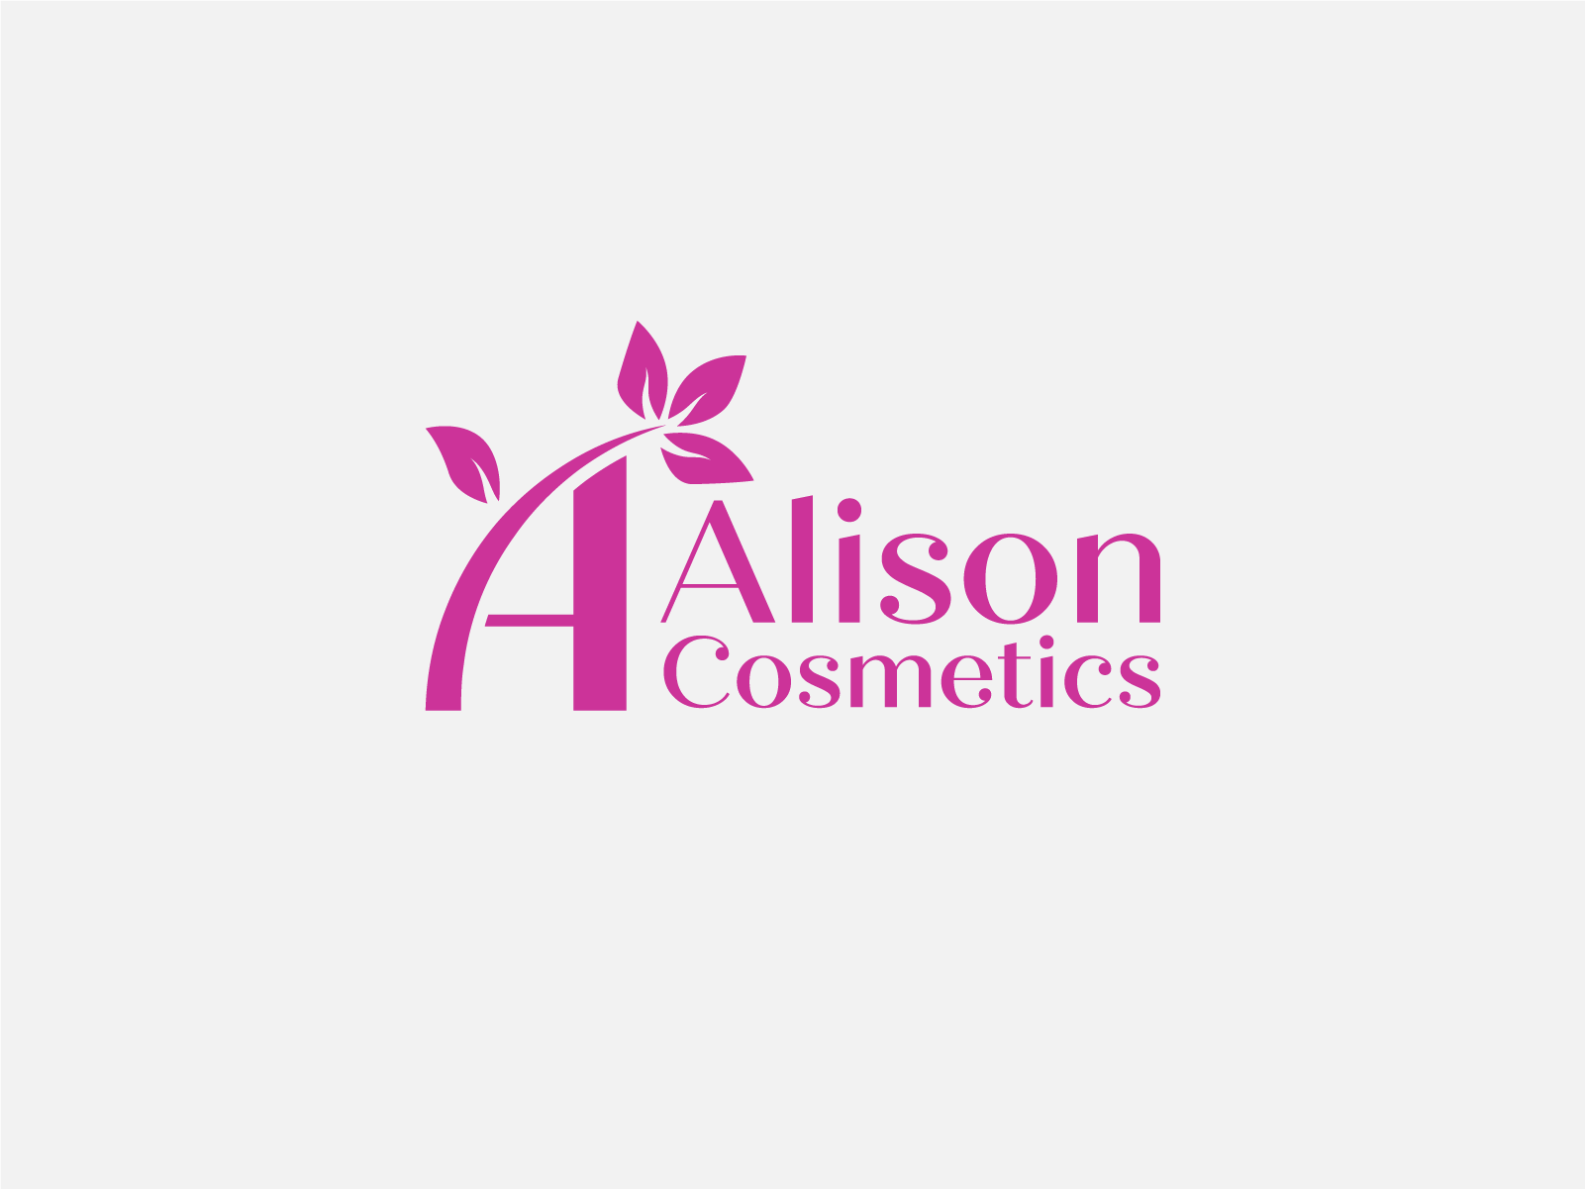 Alison Cosmetics Logo by Rodrigo Alvarez on Dribbble